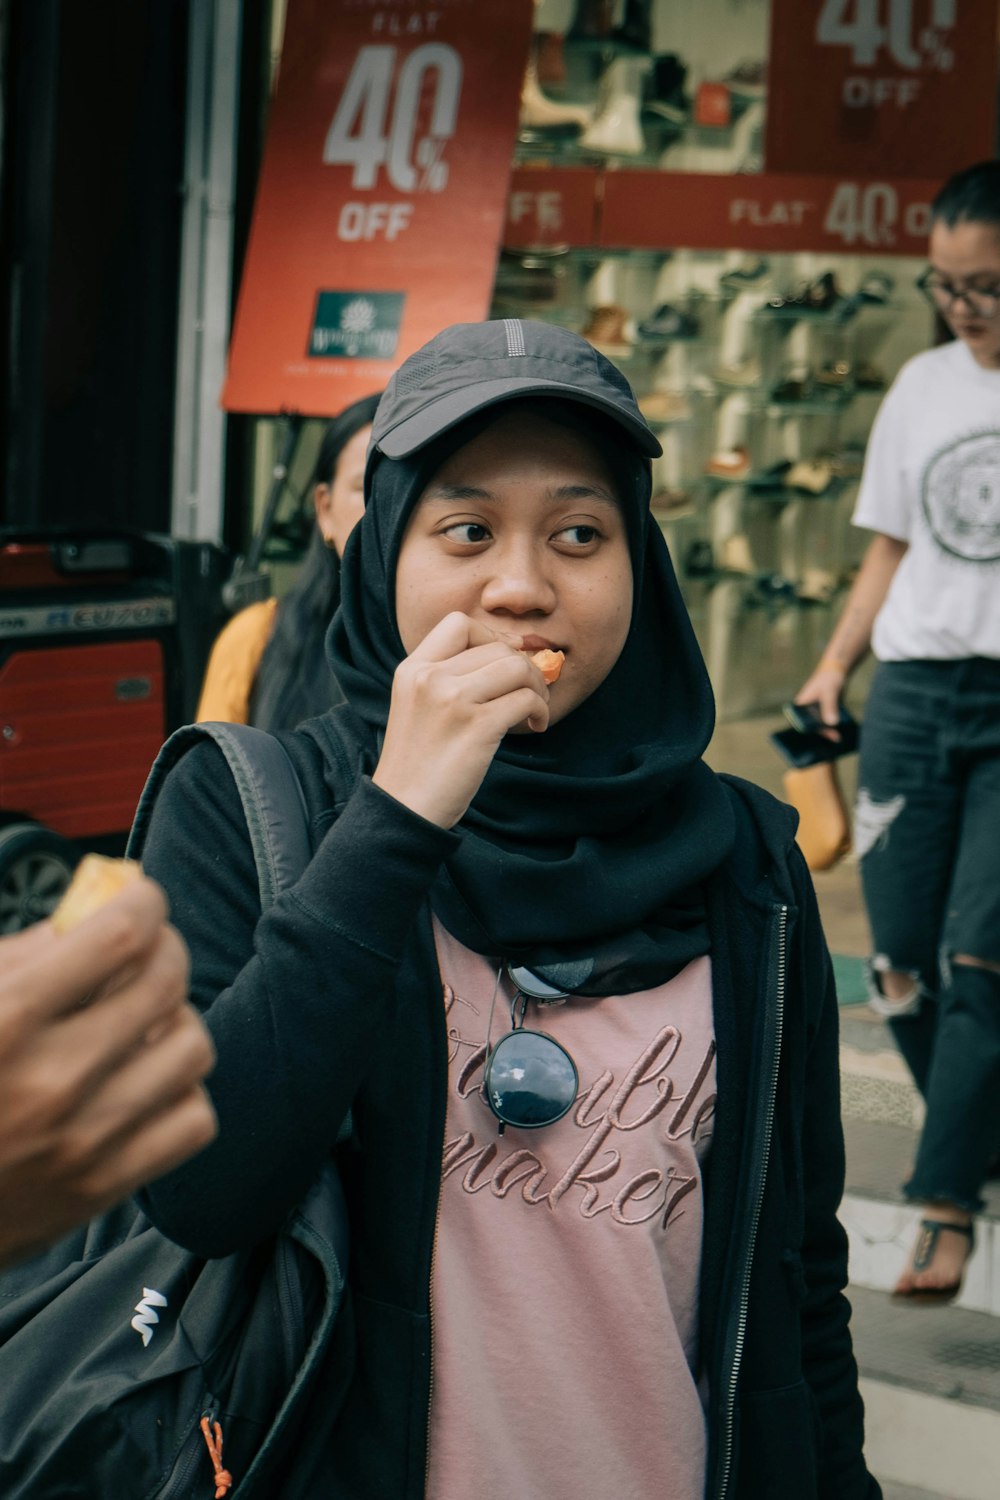 donna in hijab nero e camicia nera a maniche lunghe